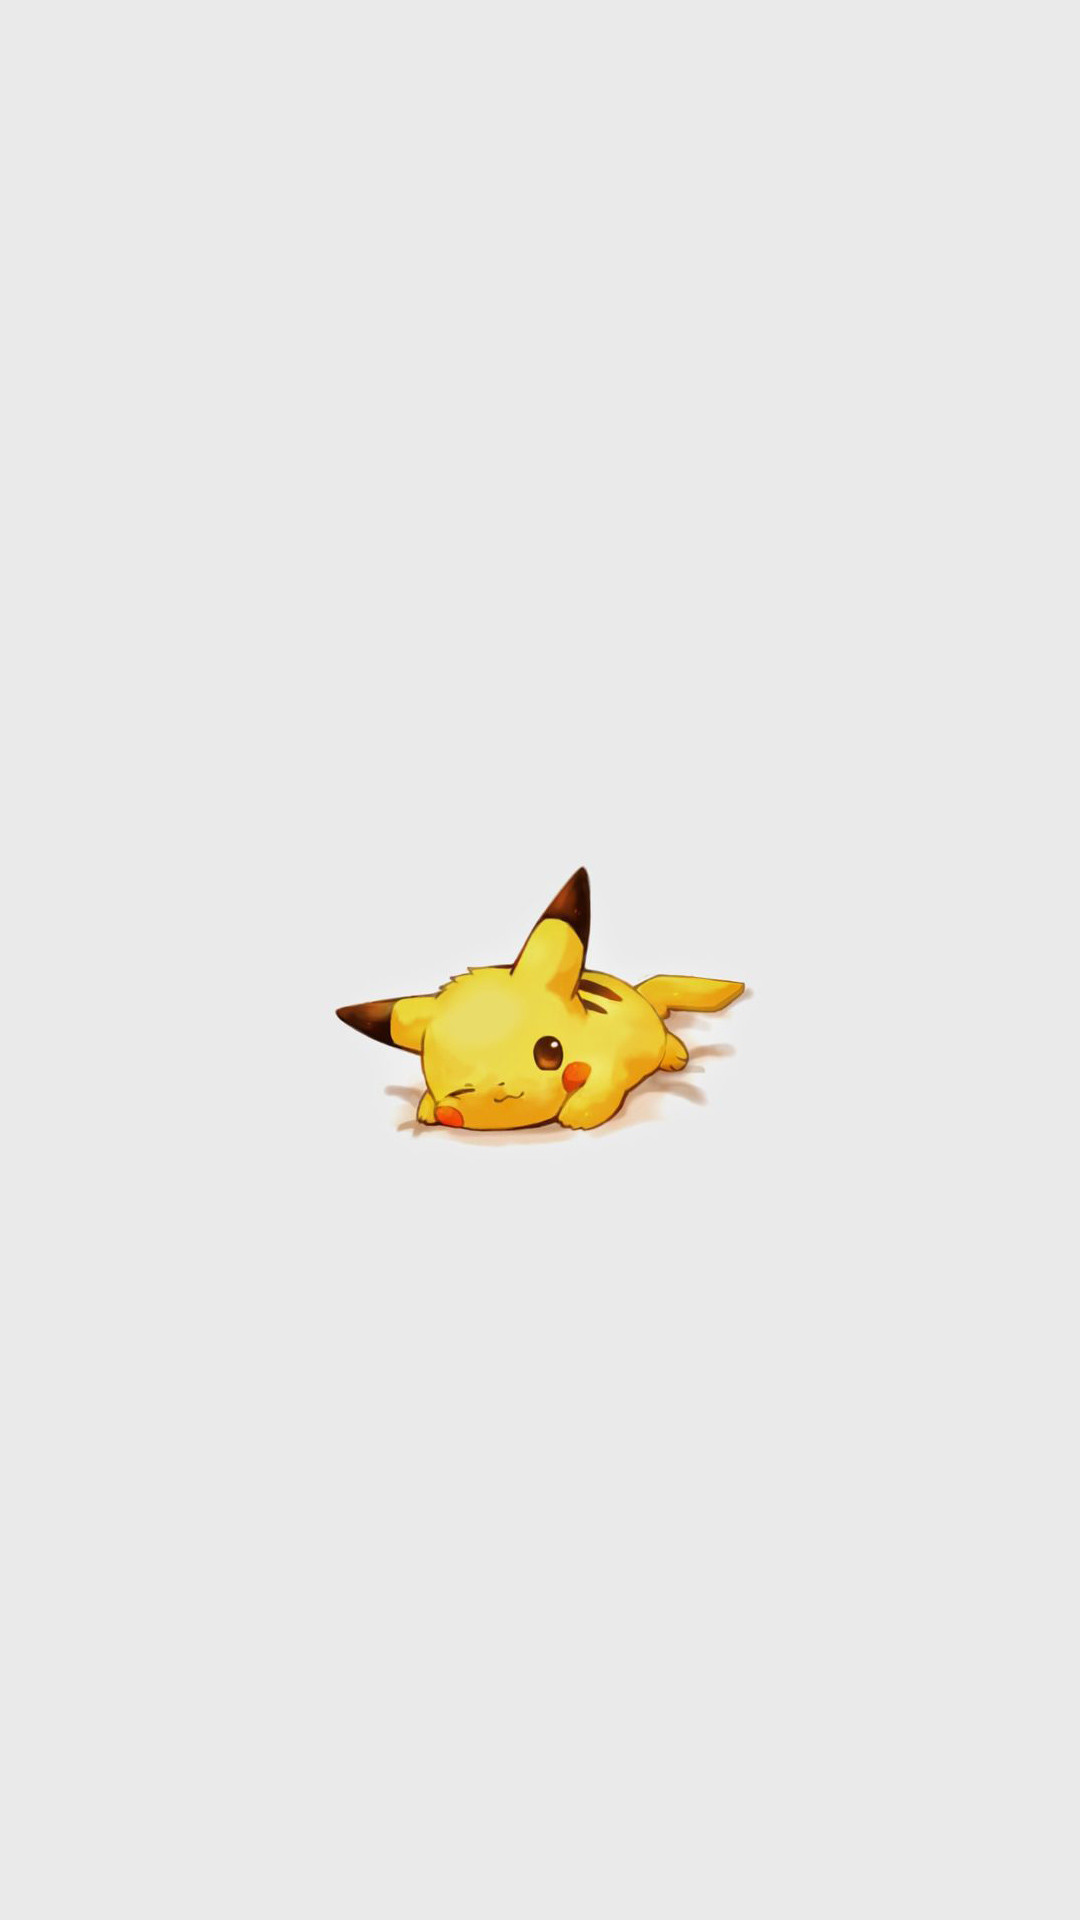 1080x1920 Cute Pikachu Pokemon Character iPhone 6+ HD Wallpaper